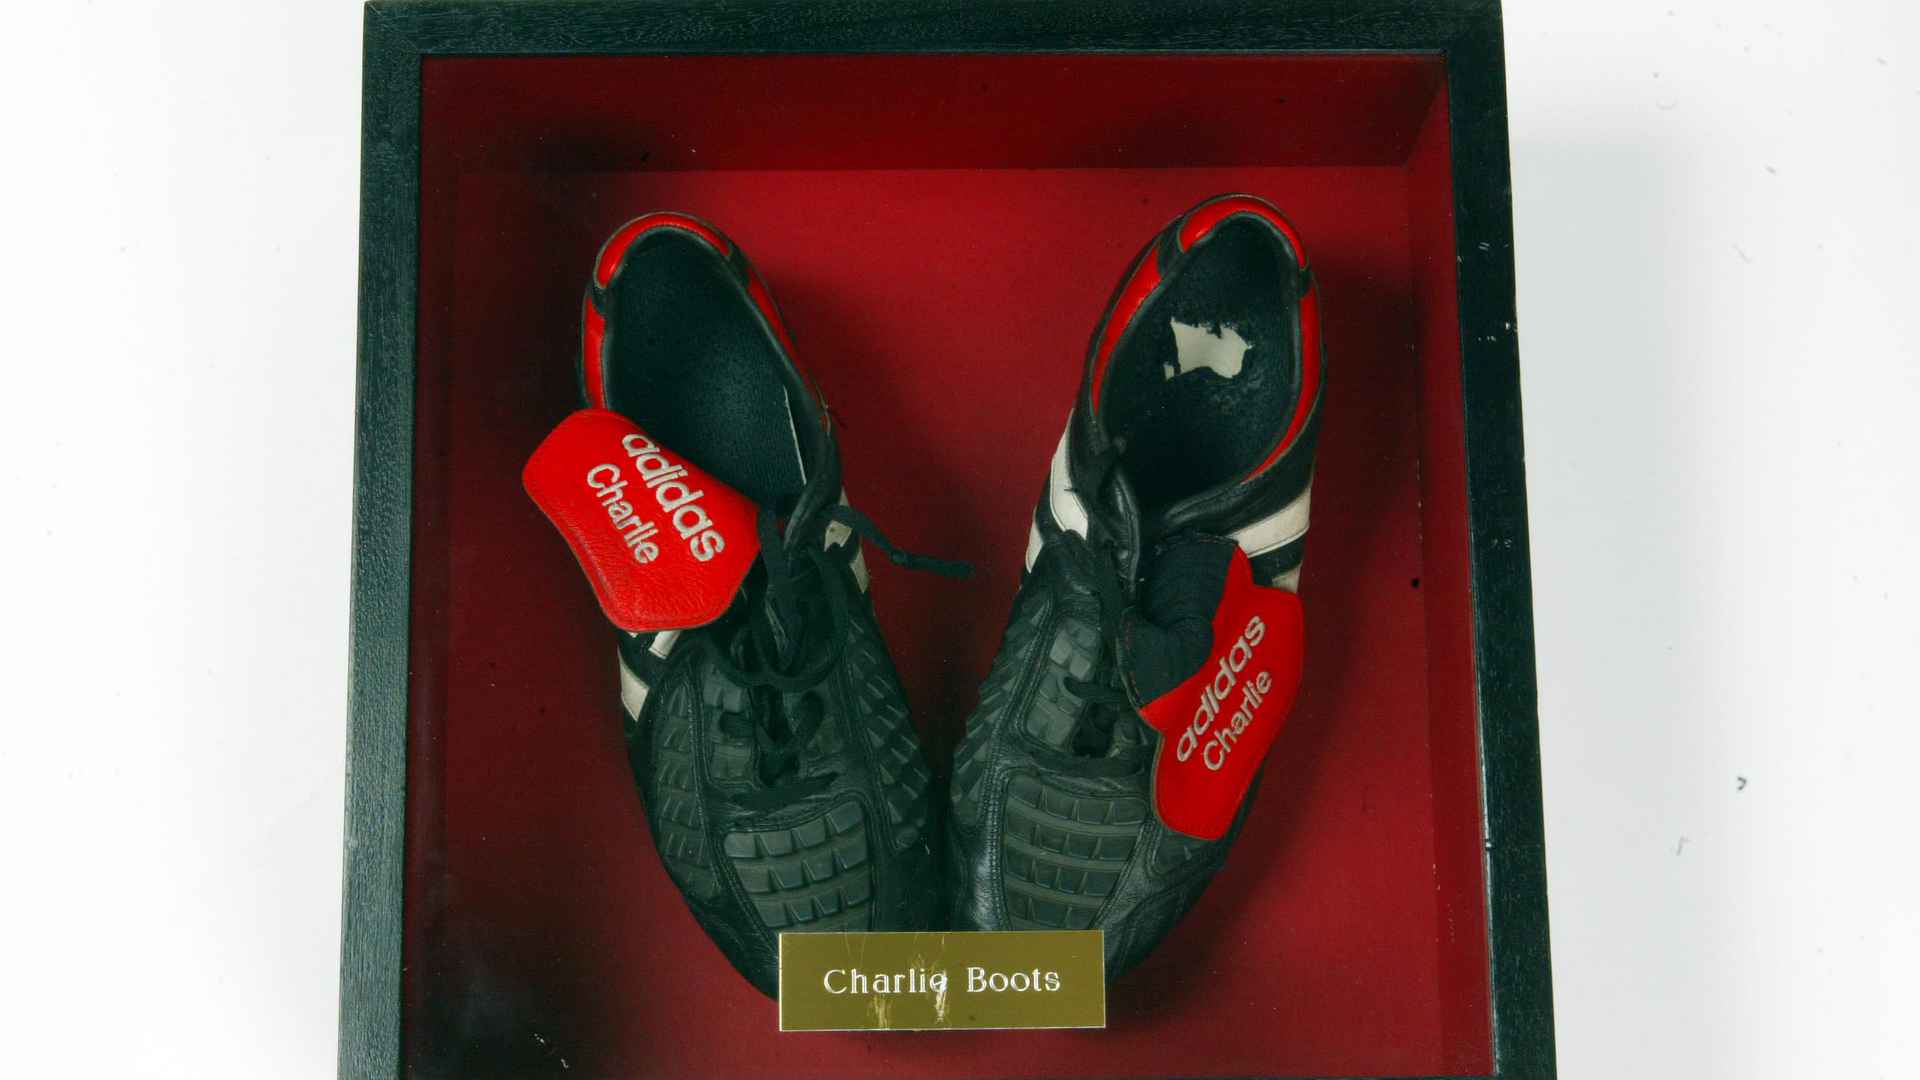 Help me find these David Beckham Boots